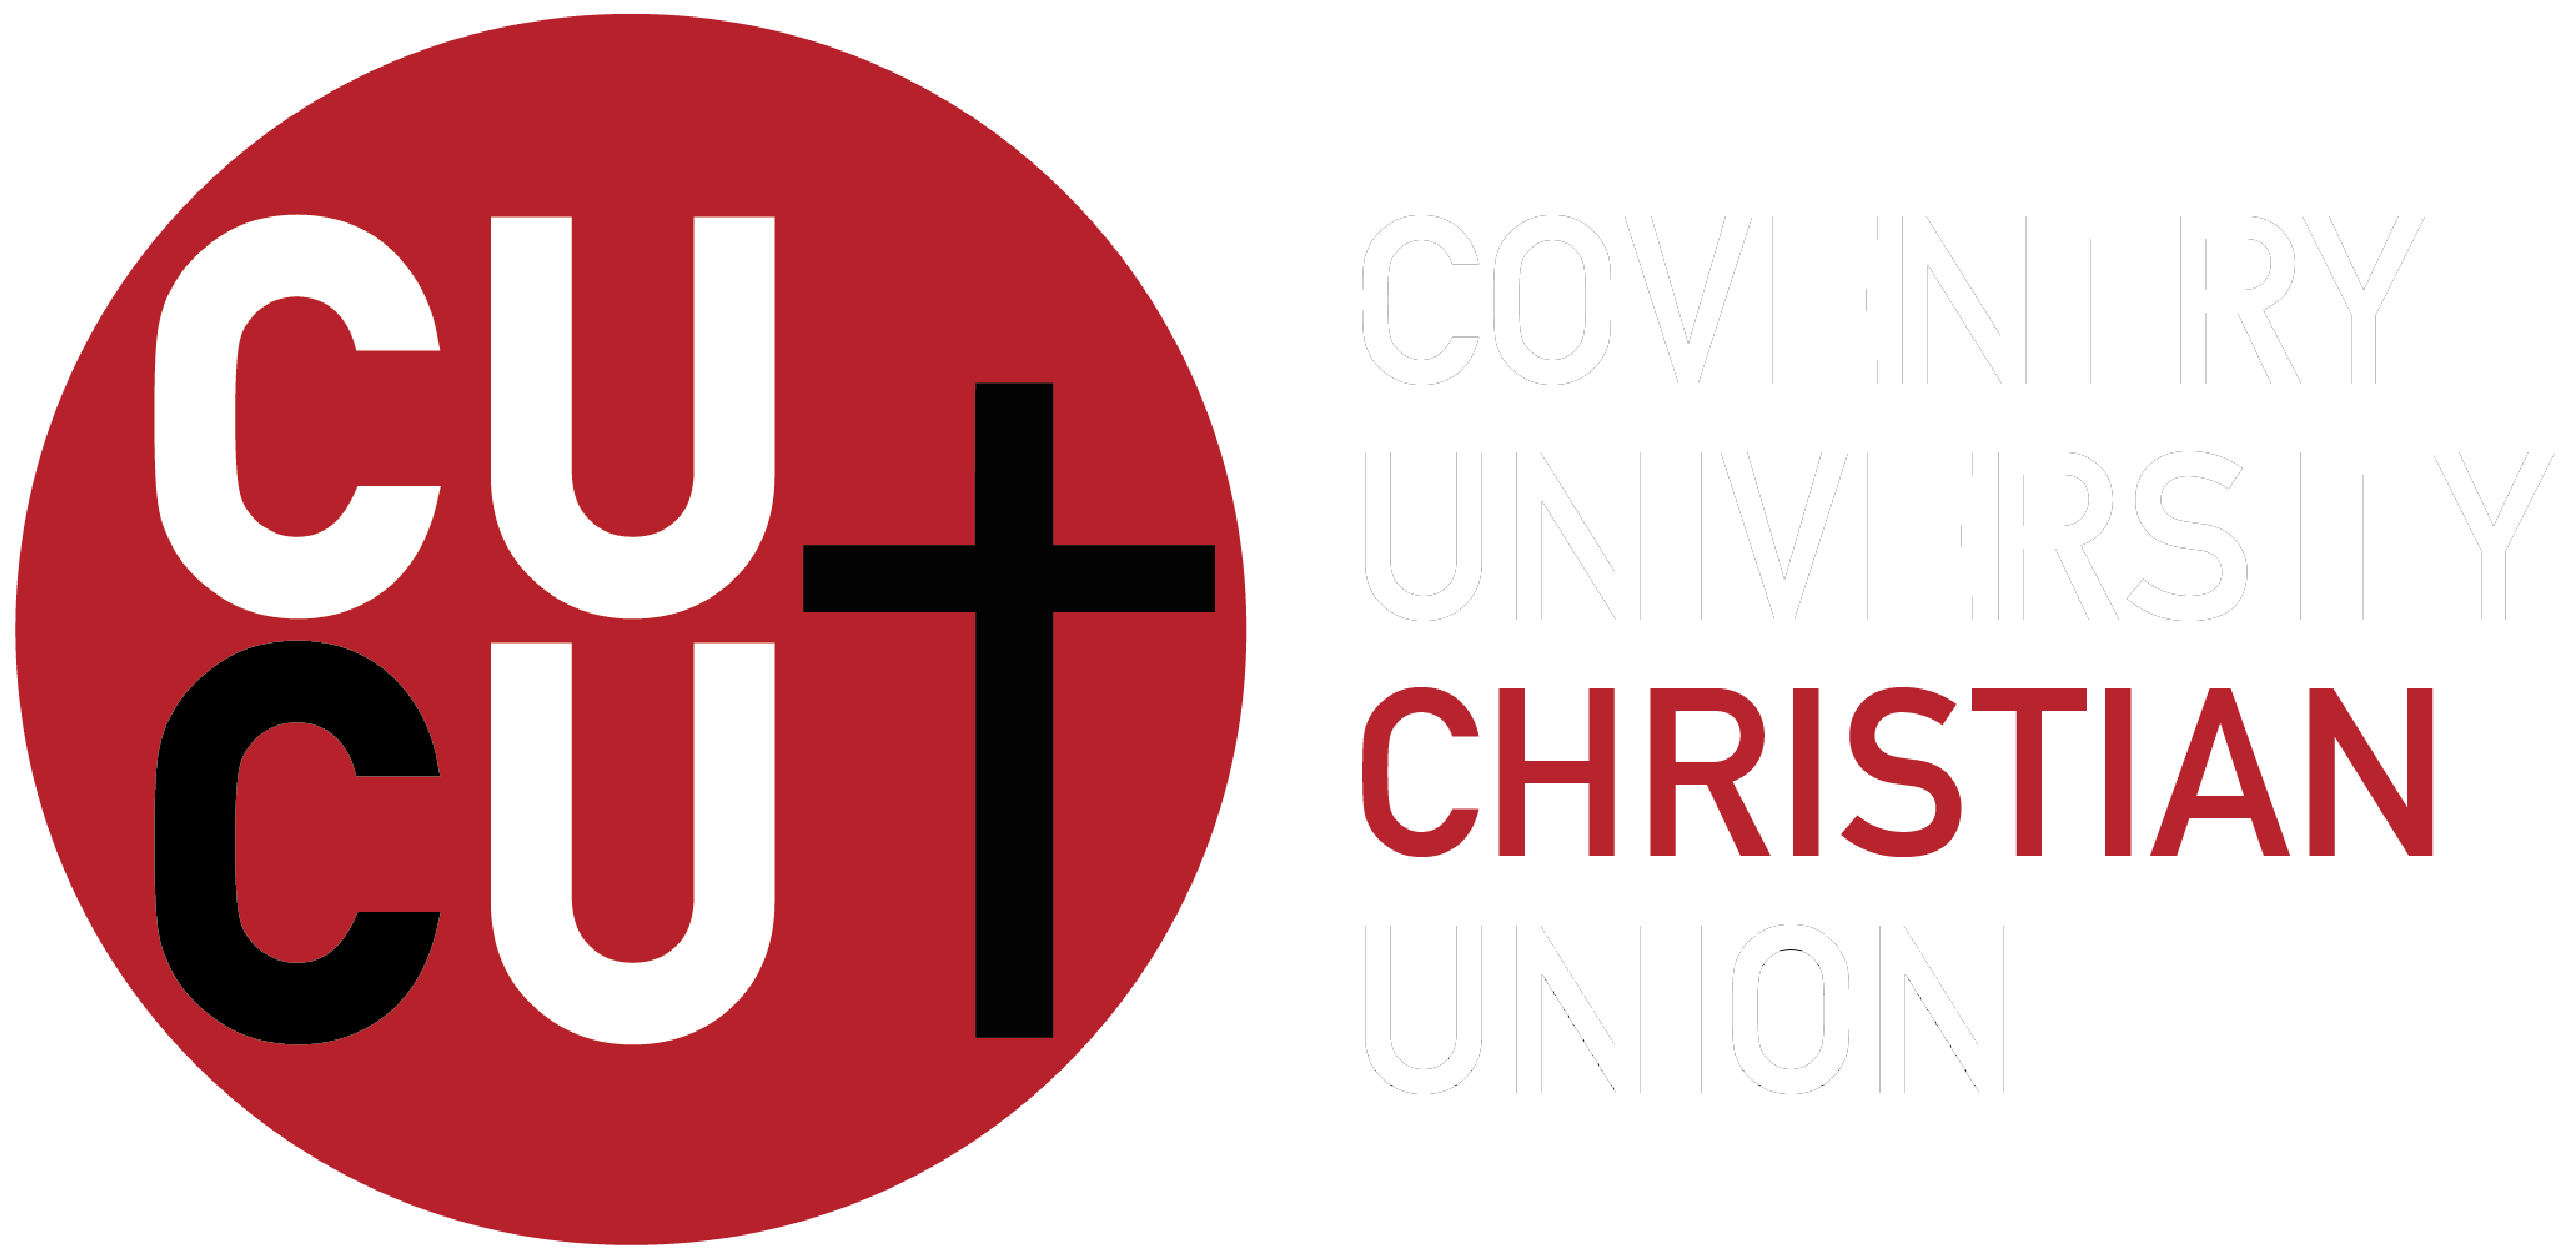 Coventry University Christian Union